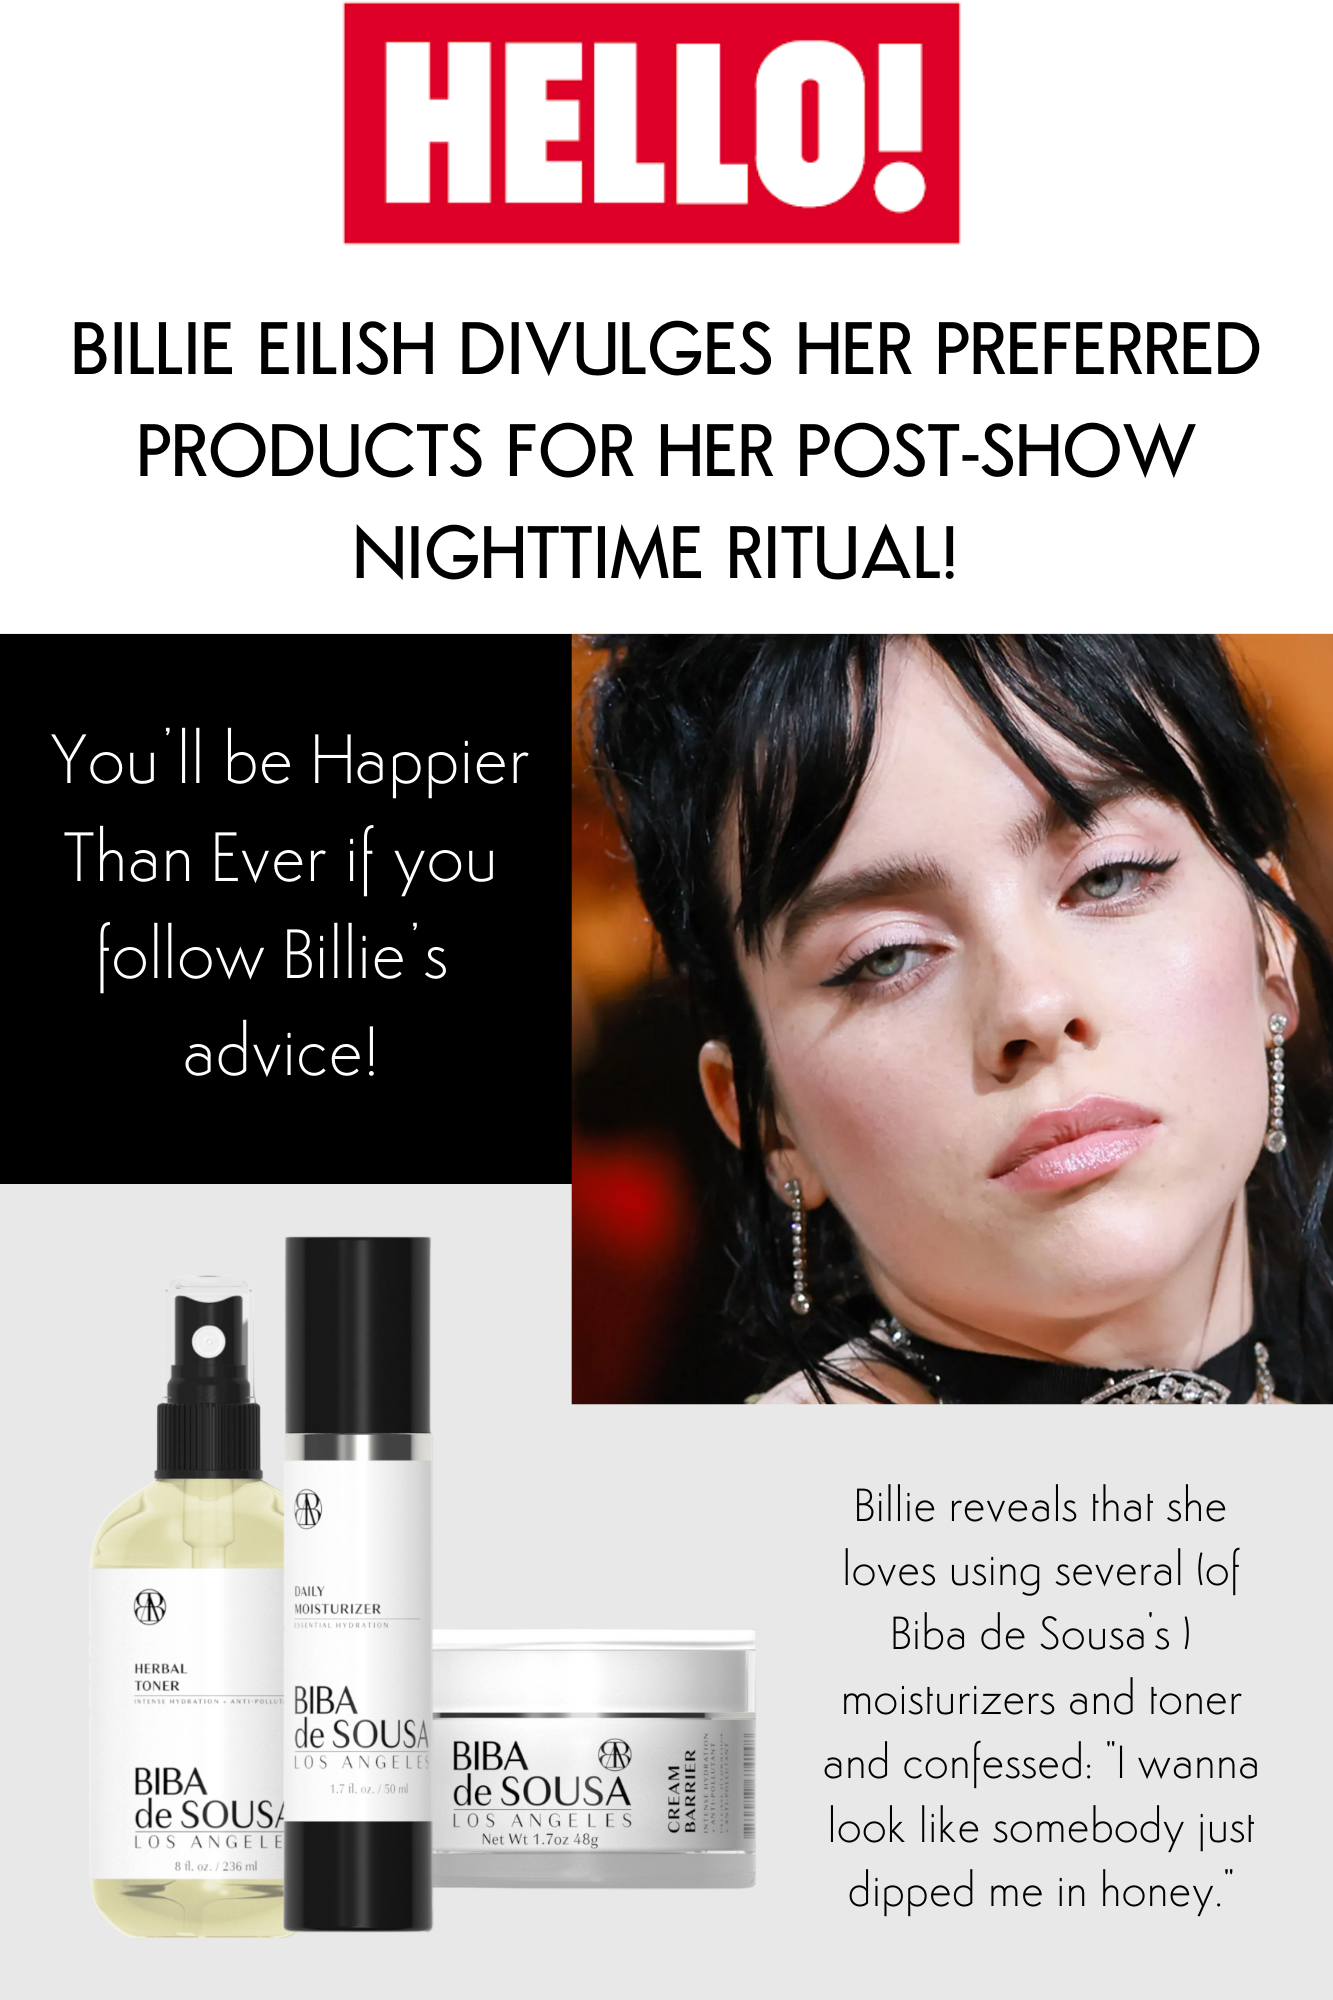 Hello Billie Eillish - Biba Los Angeles Skincare routine